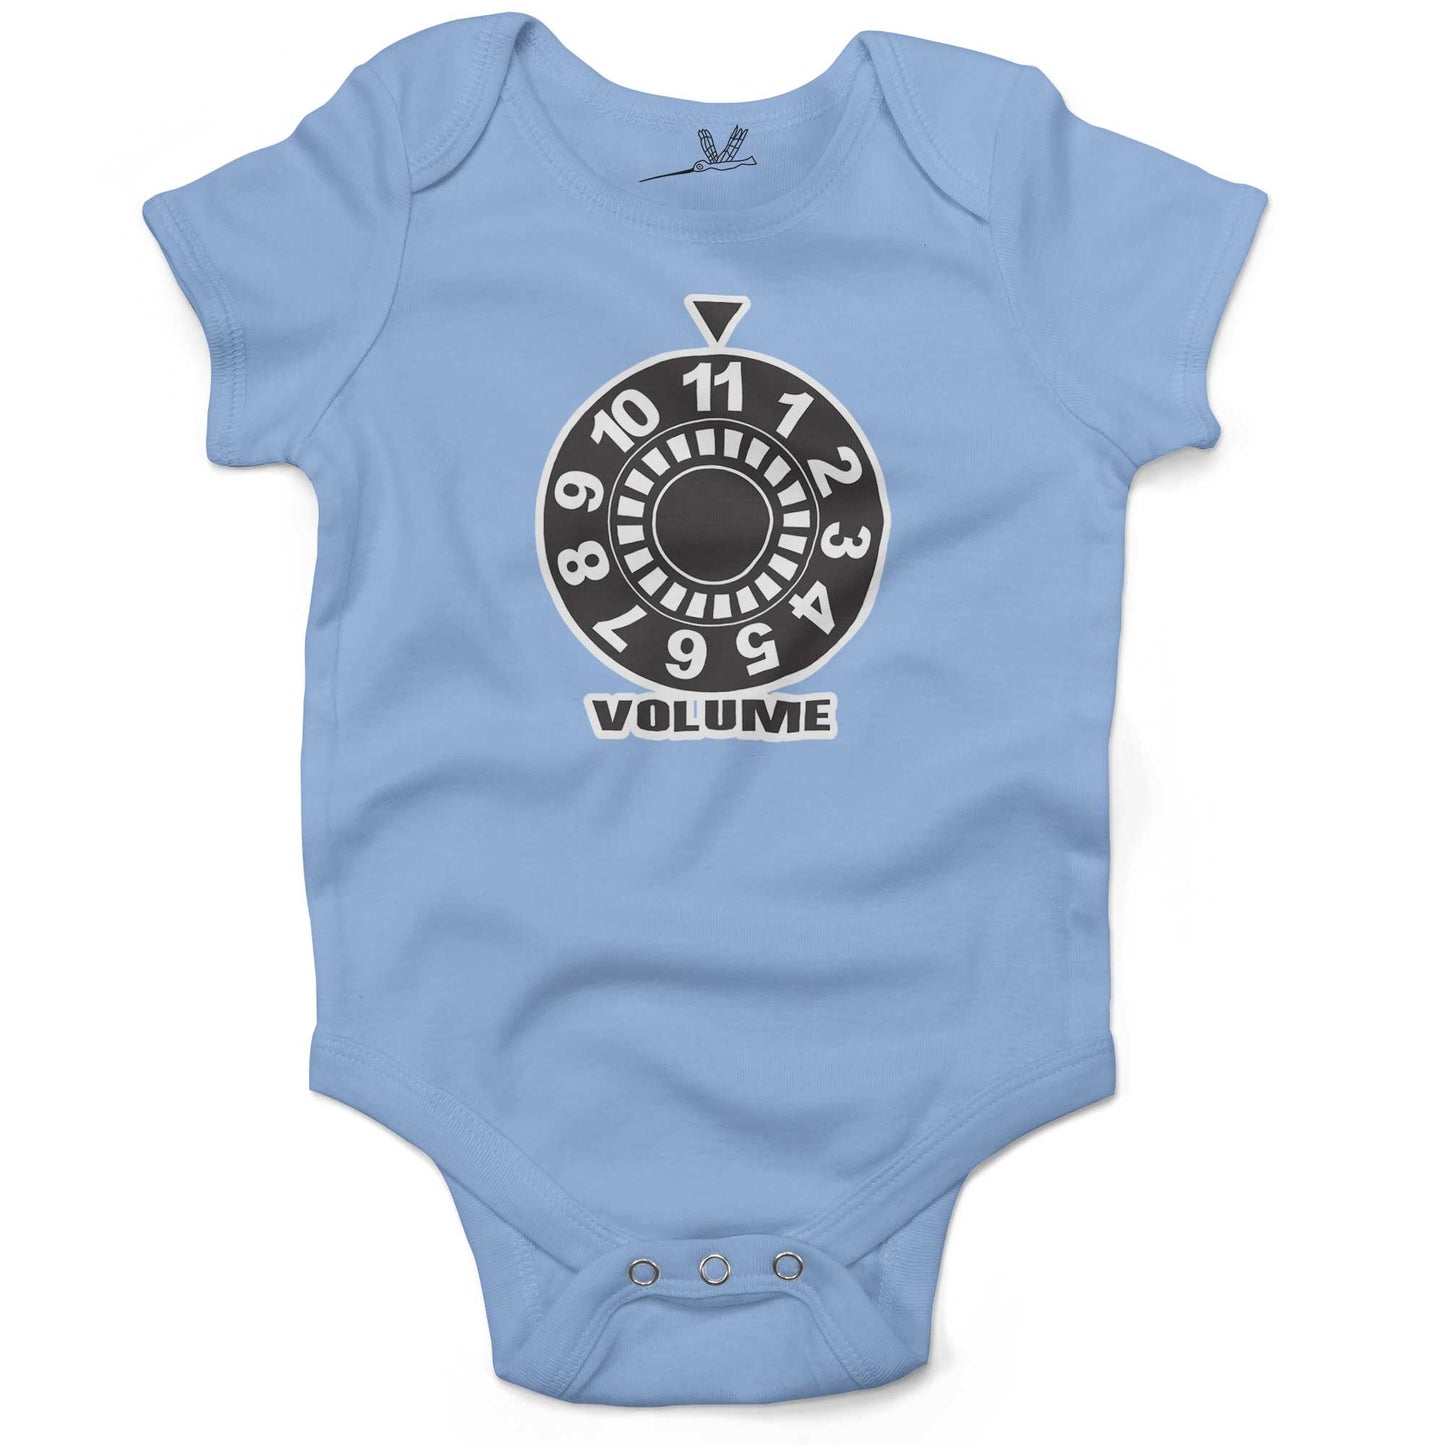 Turn It Up To 11 Infant Bodysuit or Raglan Baby Tee-Organic Baby Blue-3-6 months